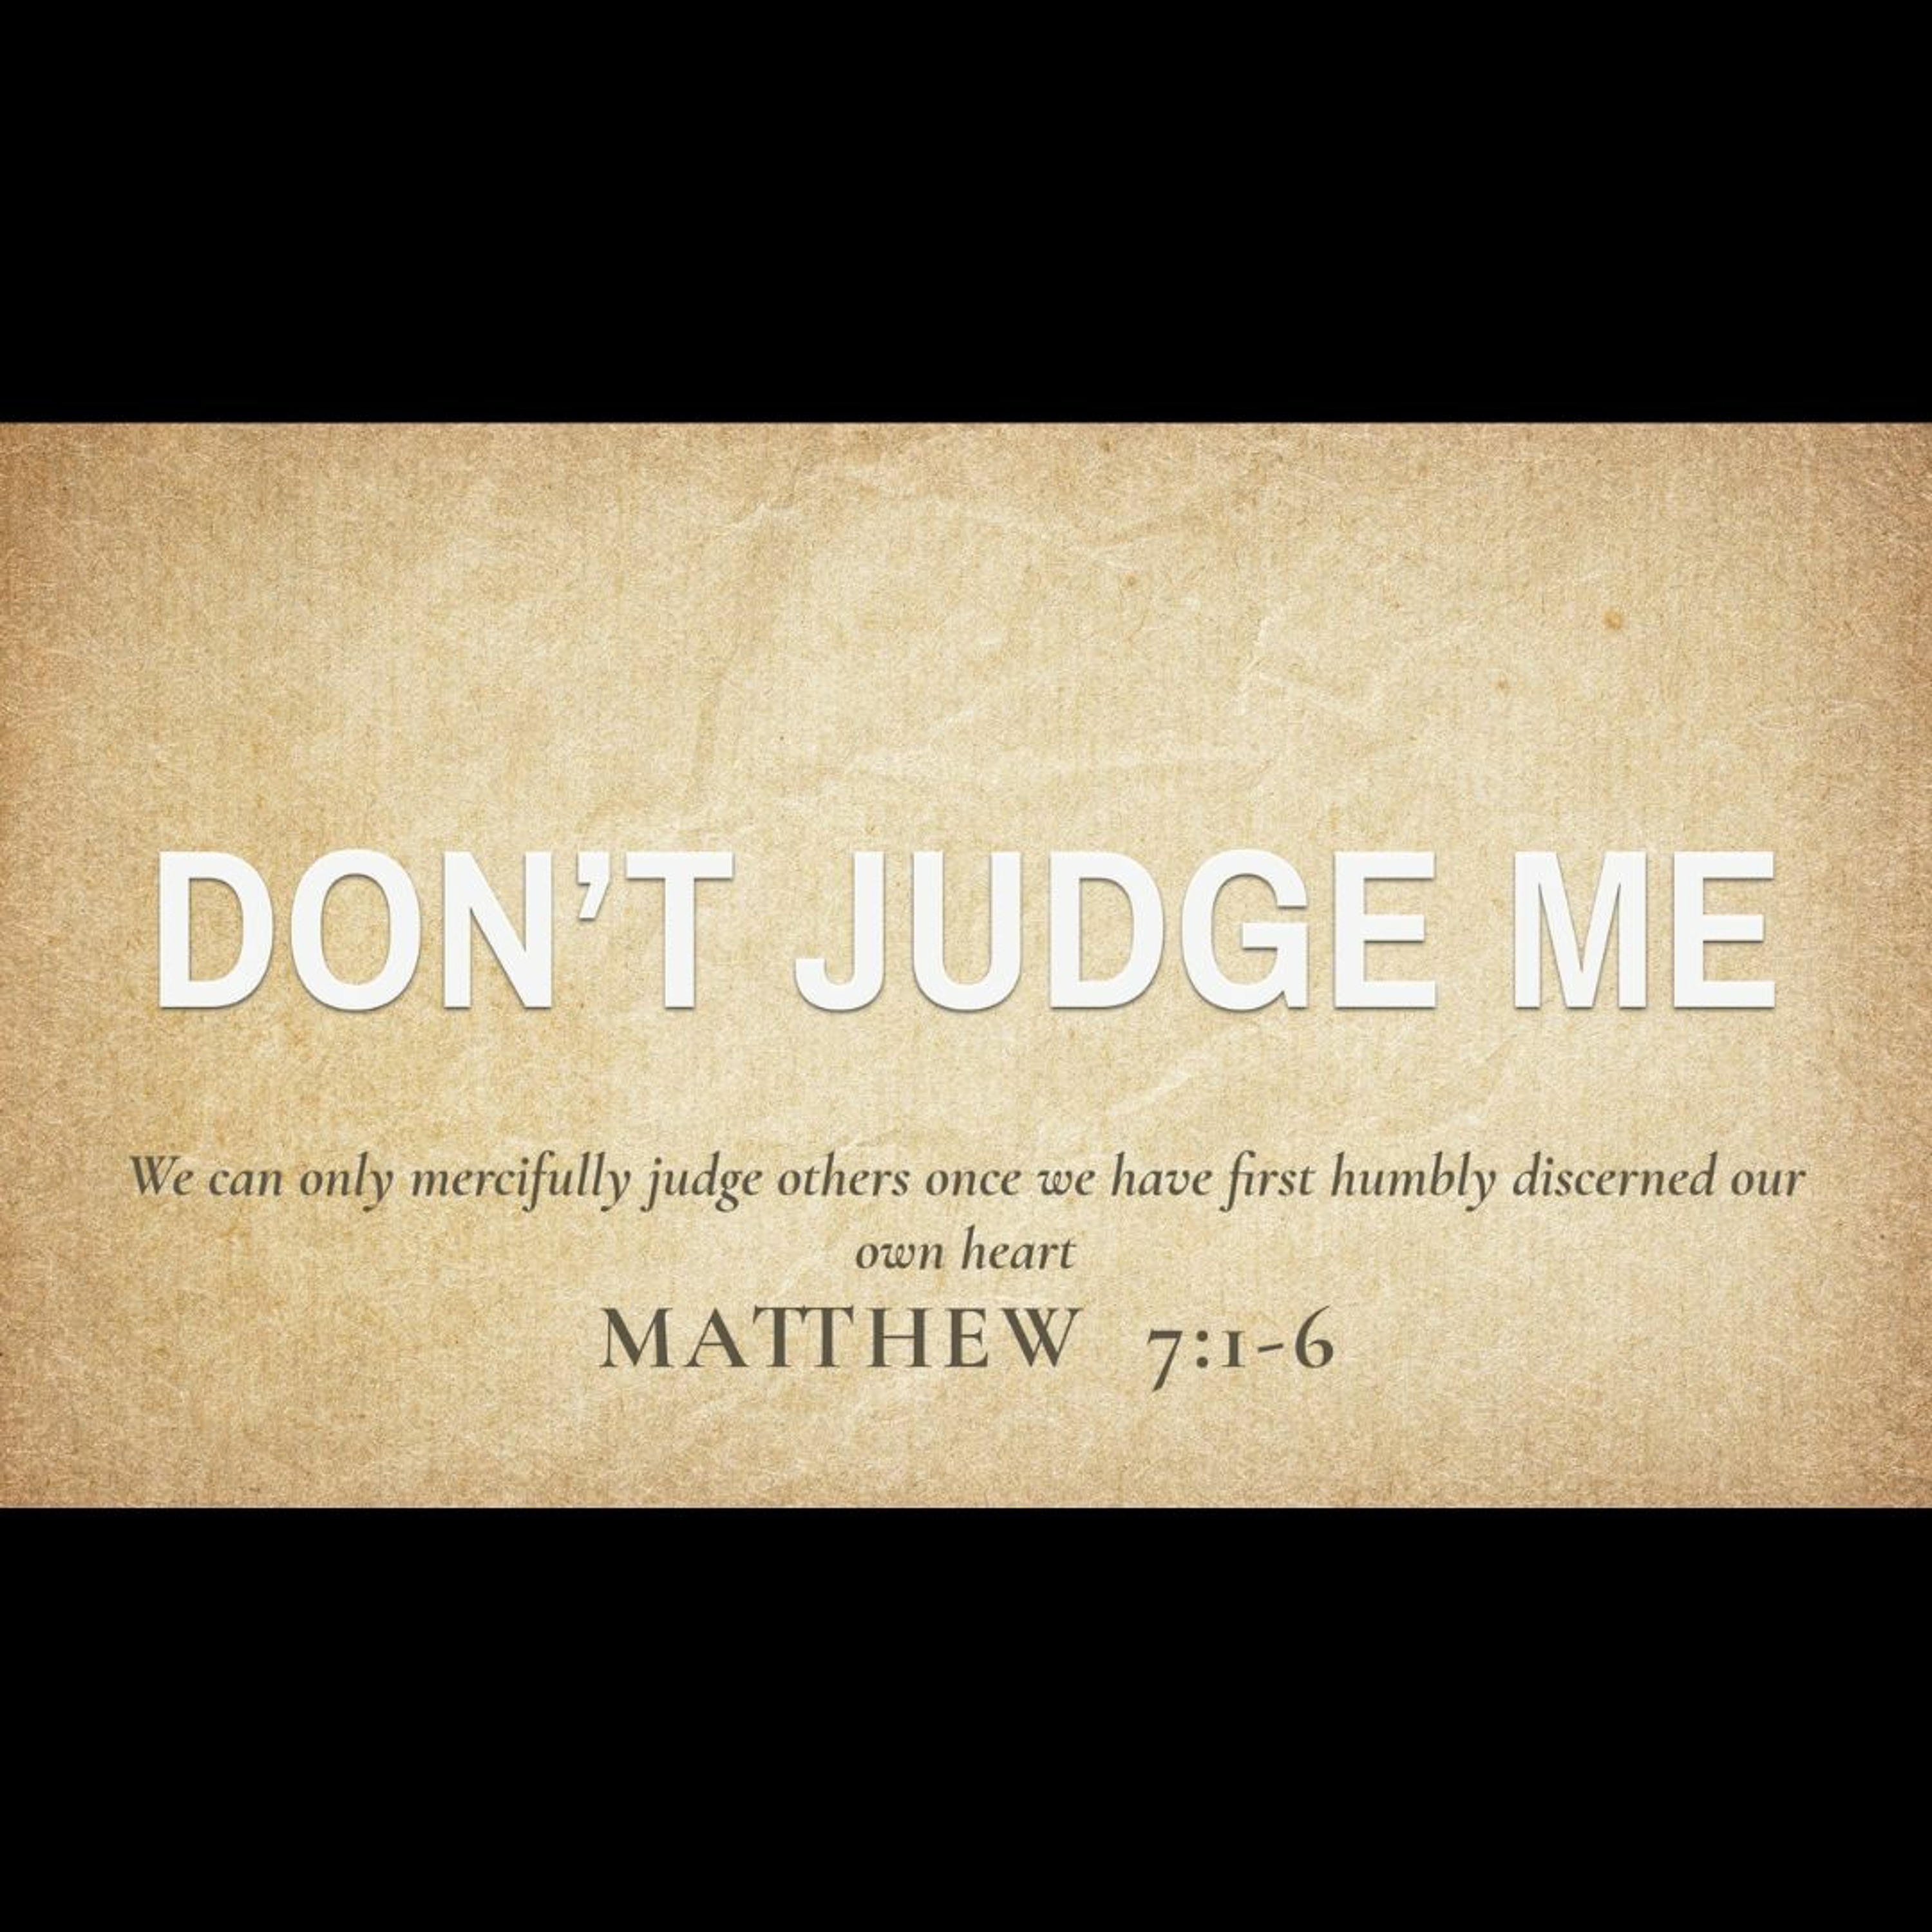 Don’t Judge Me (Matthew 7:1-6)